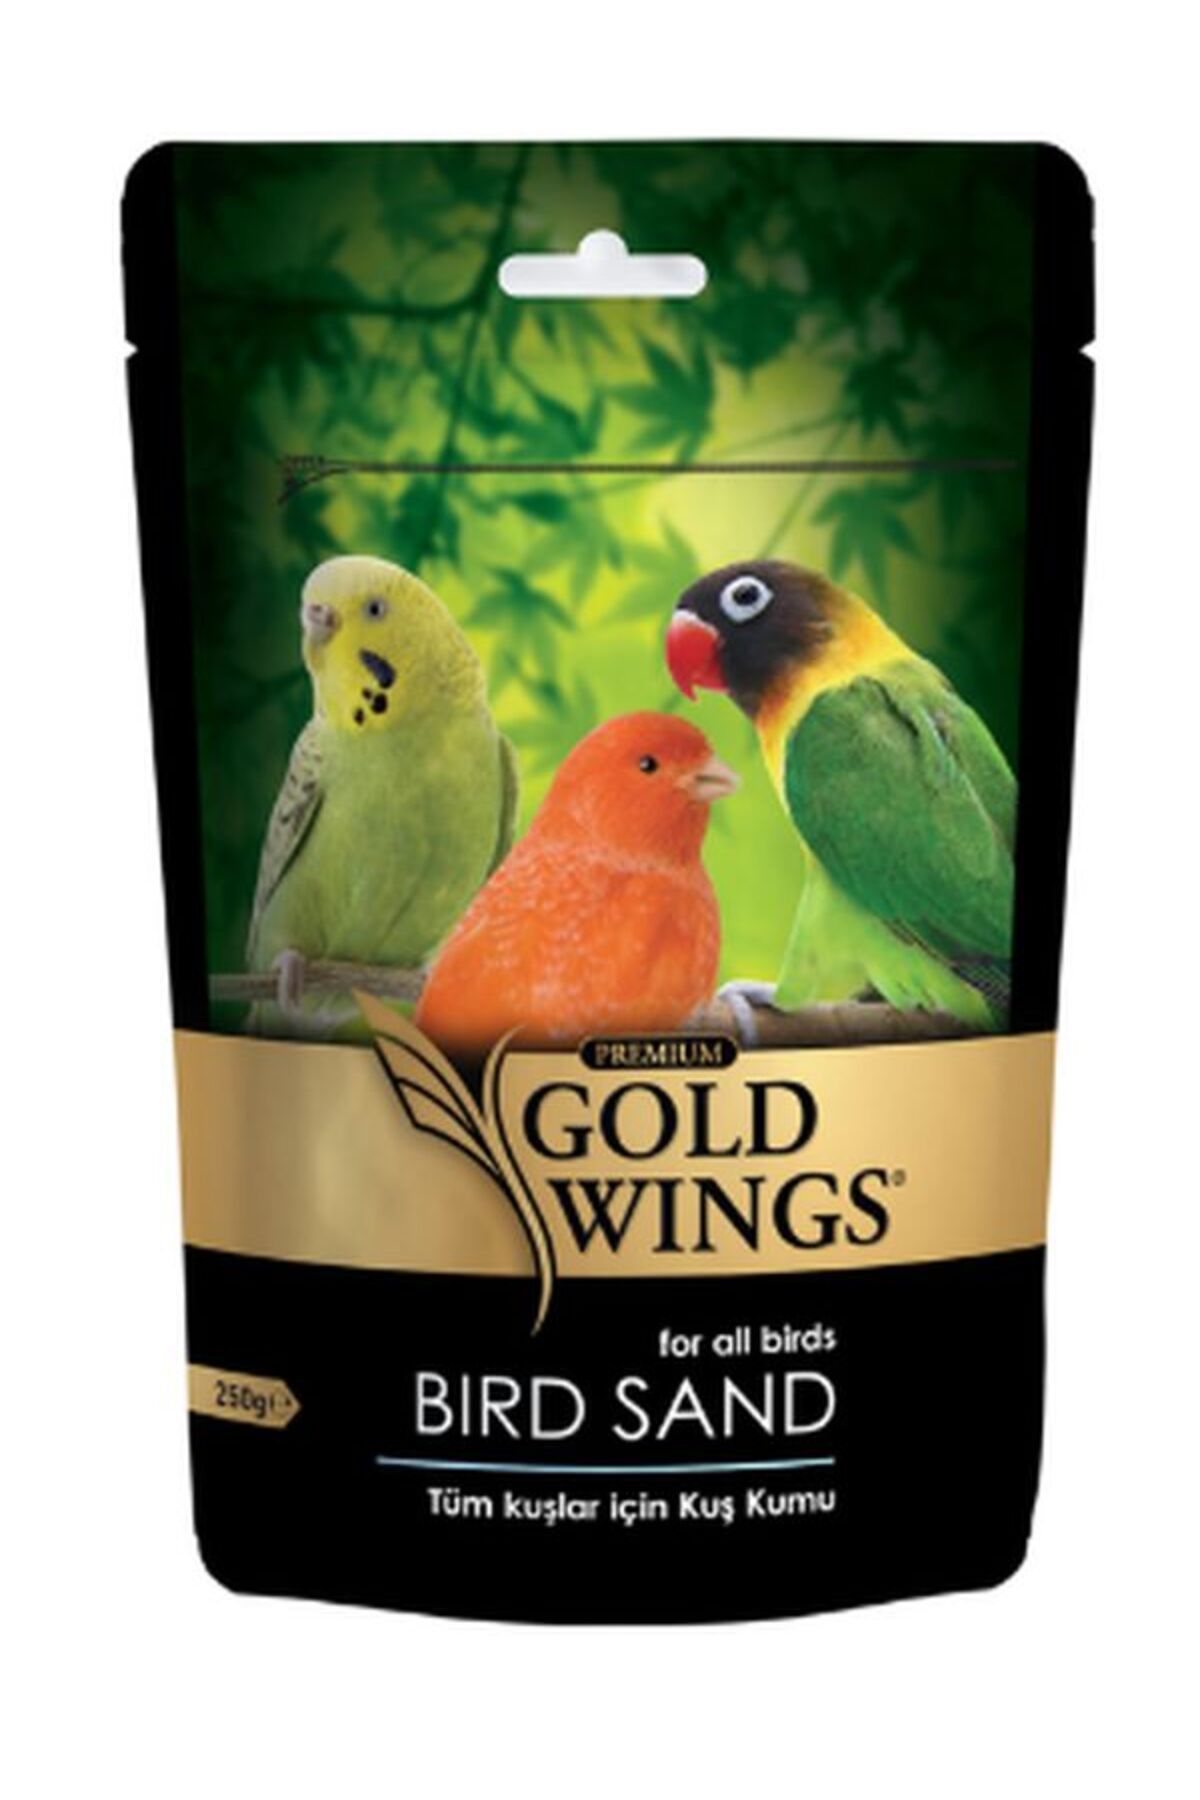 Gold Wings Orjinal Premium Kuş Kumu